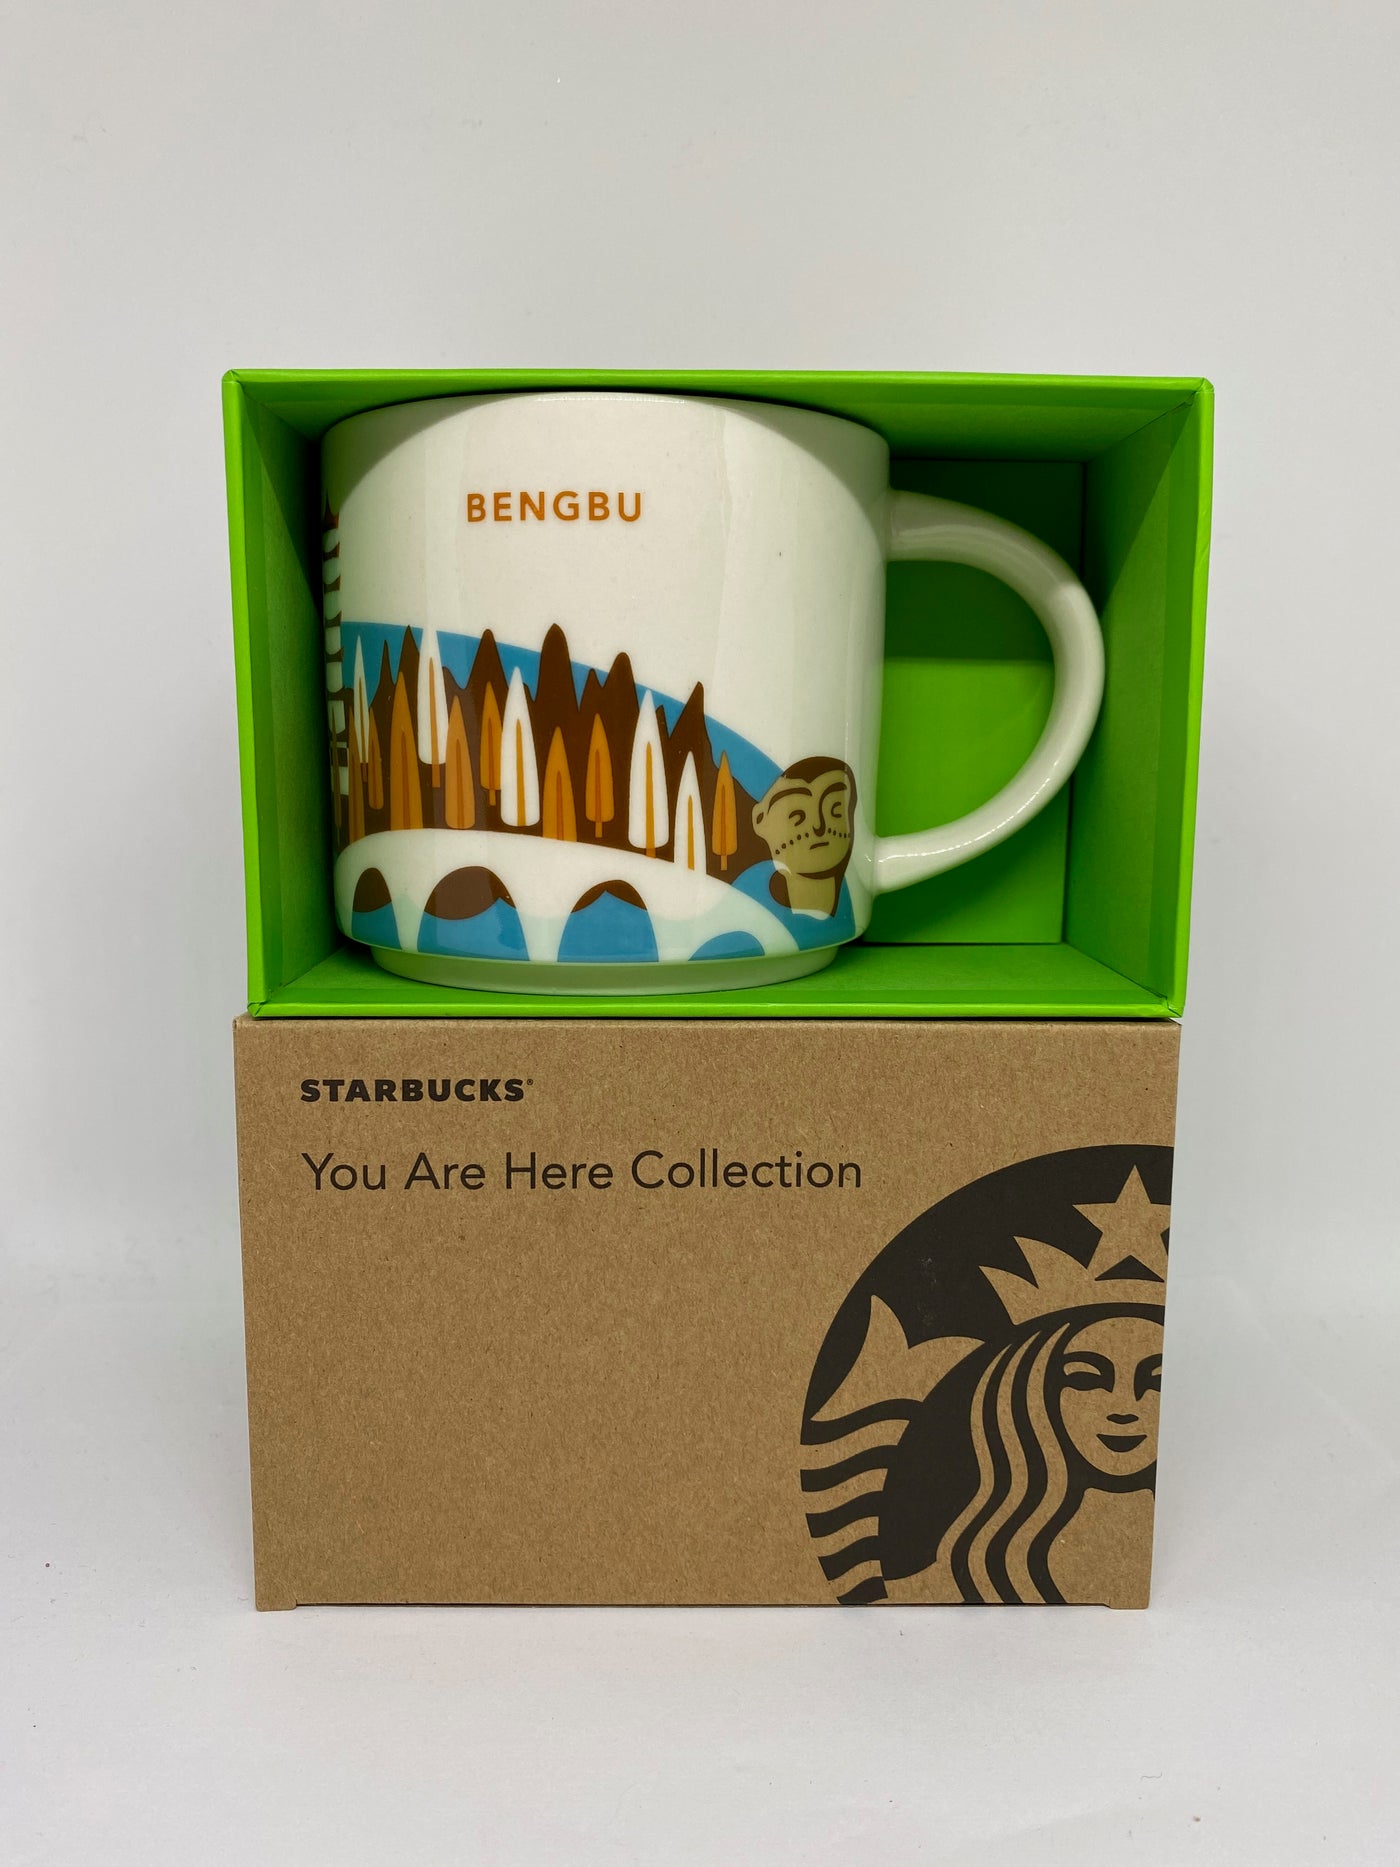 Starbucks You Are Here Collection Bengbu China Ceramic Coffee Mug New With Box